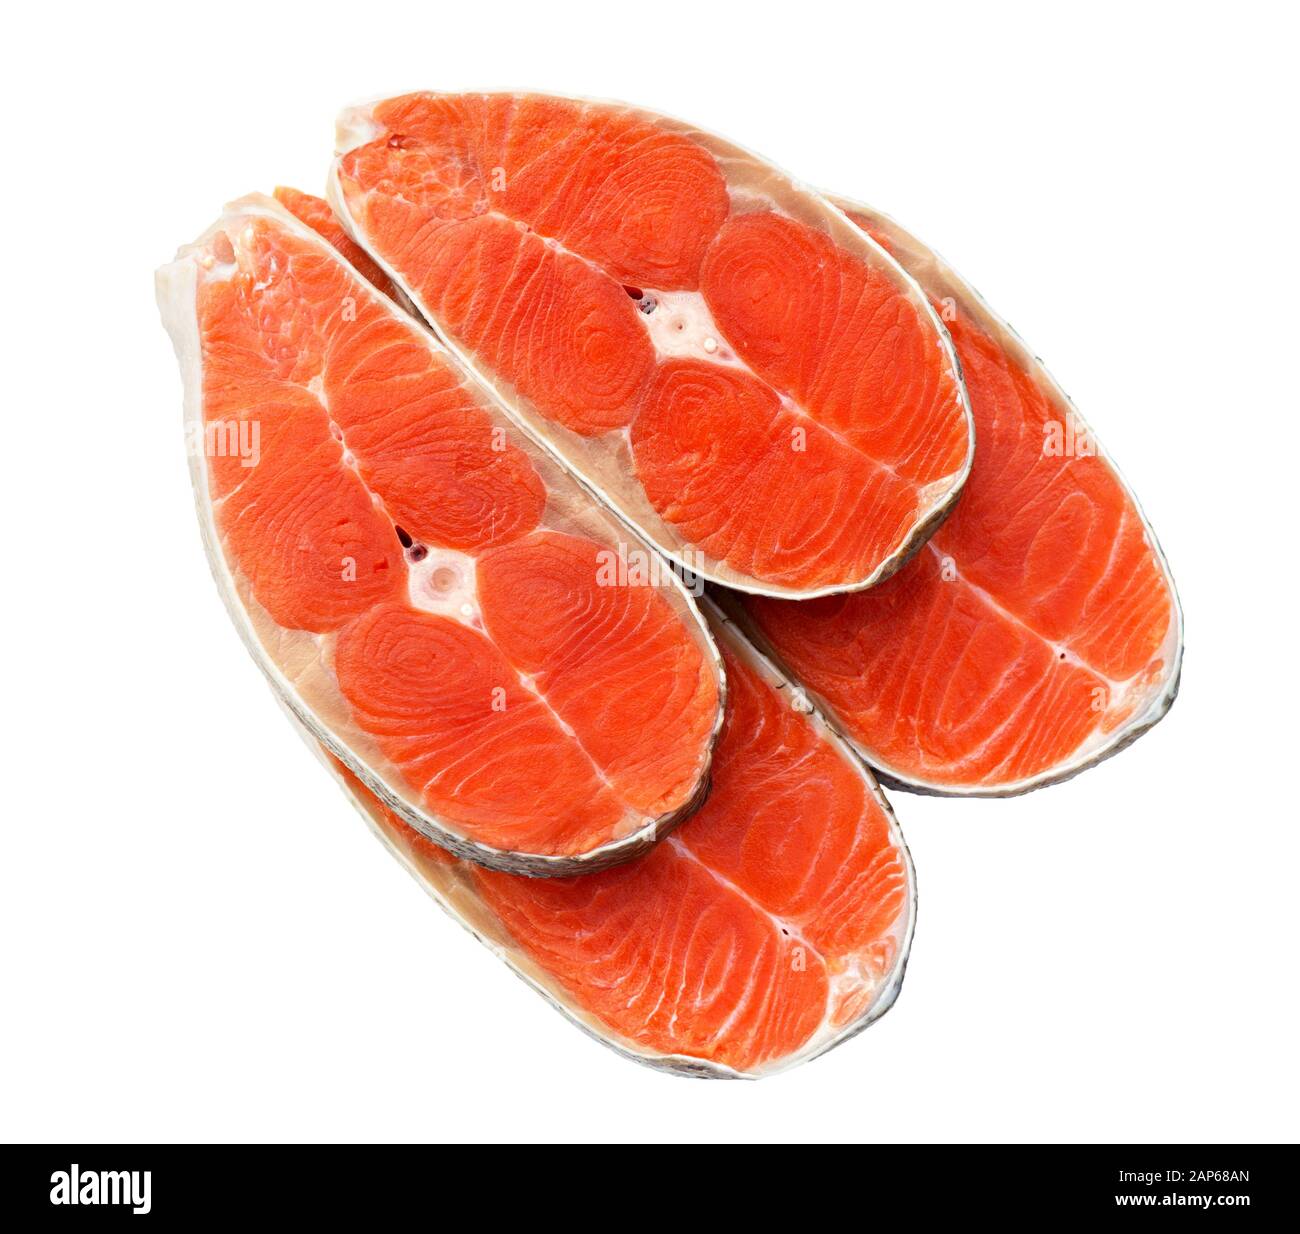 Filete de pescado rojo de salmón crudo fresco aislado sobre fondo blanco. Foto de stock